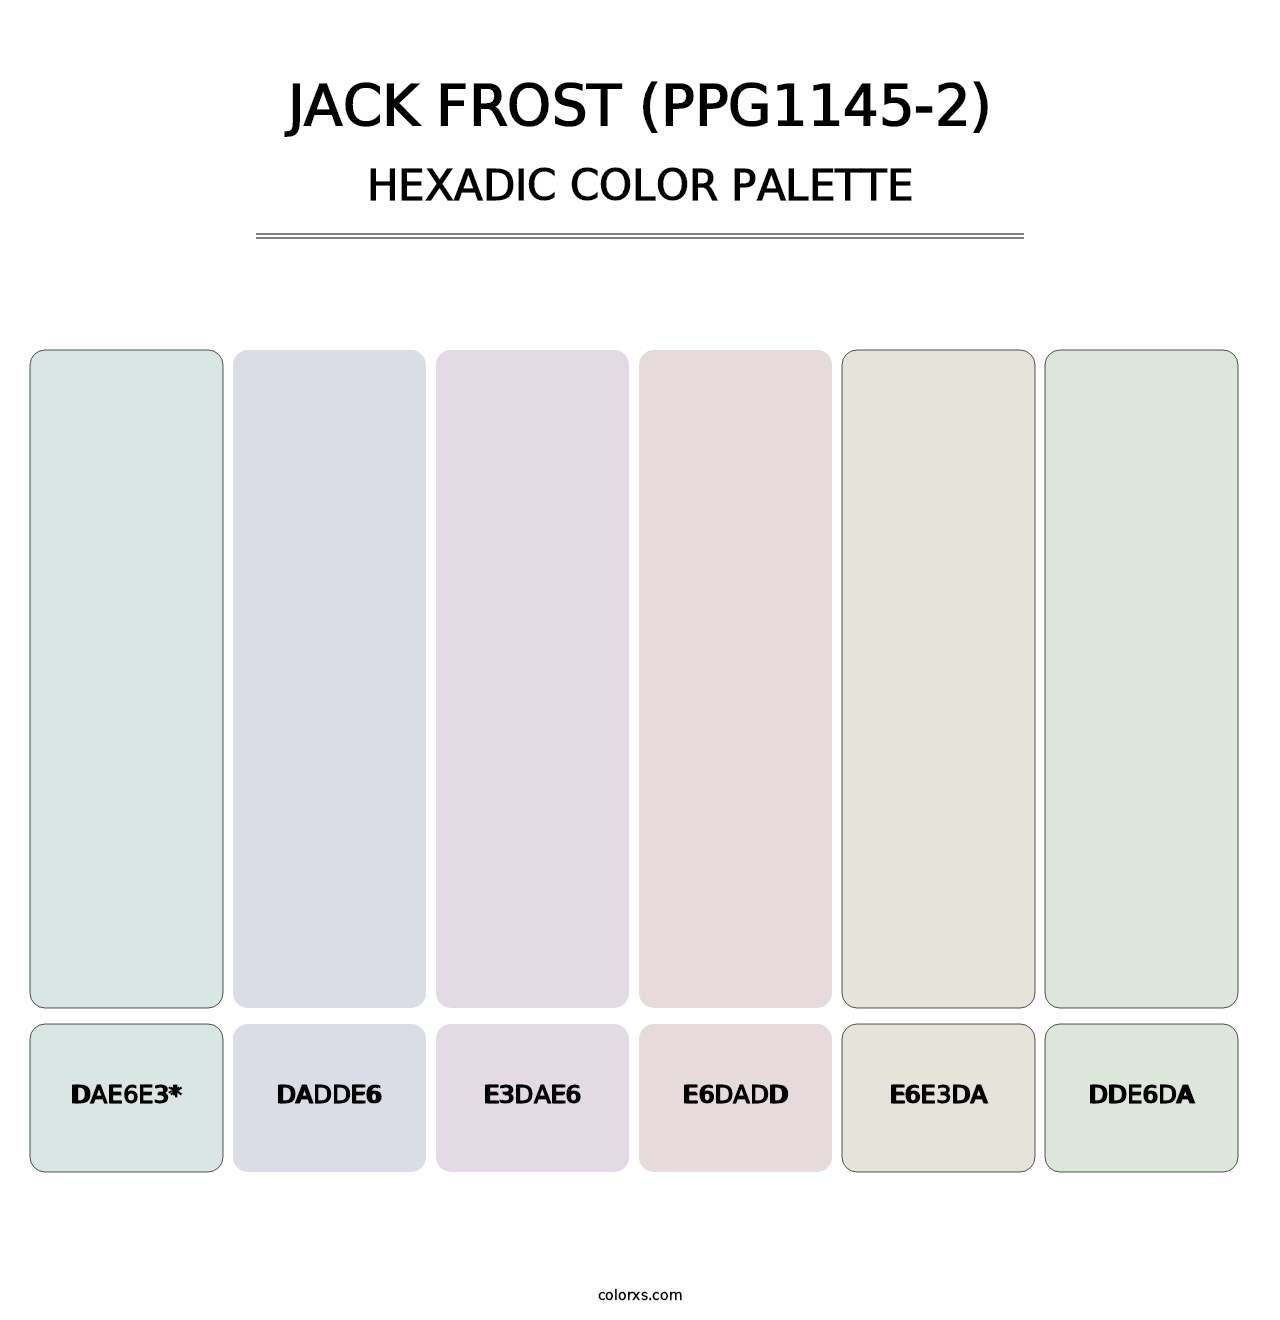 Jack Frost (PPG1145-2) - Hexadic Color Palette